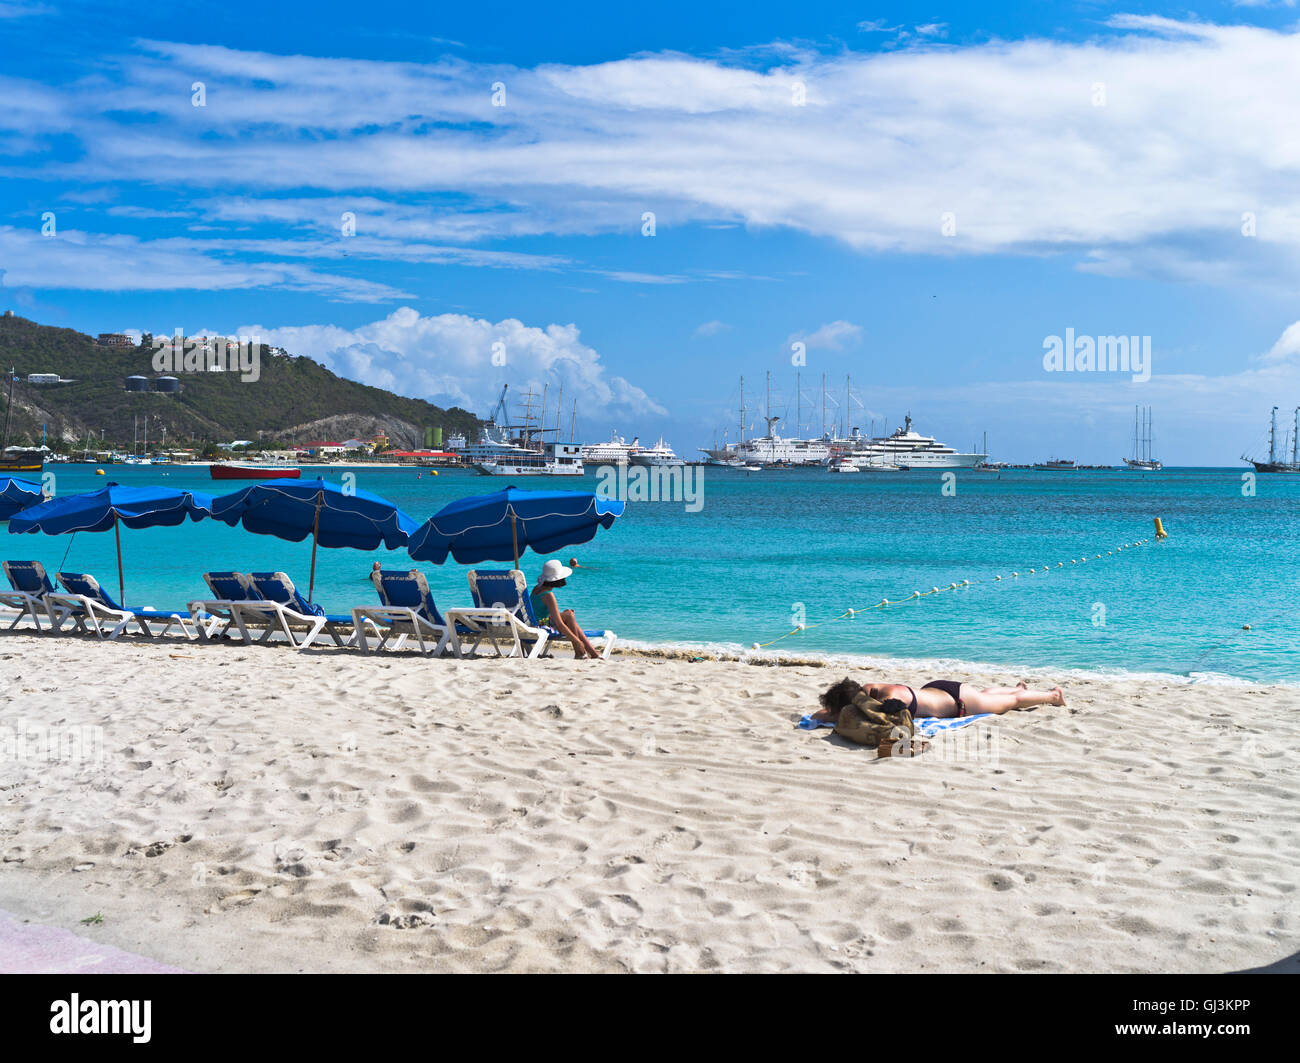 dh Philipsburg ST MAARTEN CARIBBEAN Sand beach sunbathers sun lounger umbrellas Cruise liners in port Stock Photo